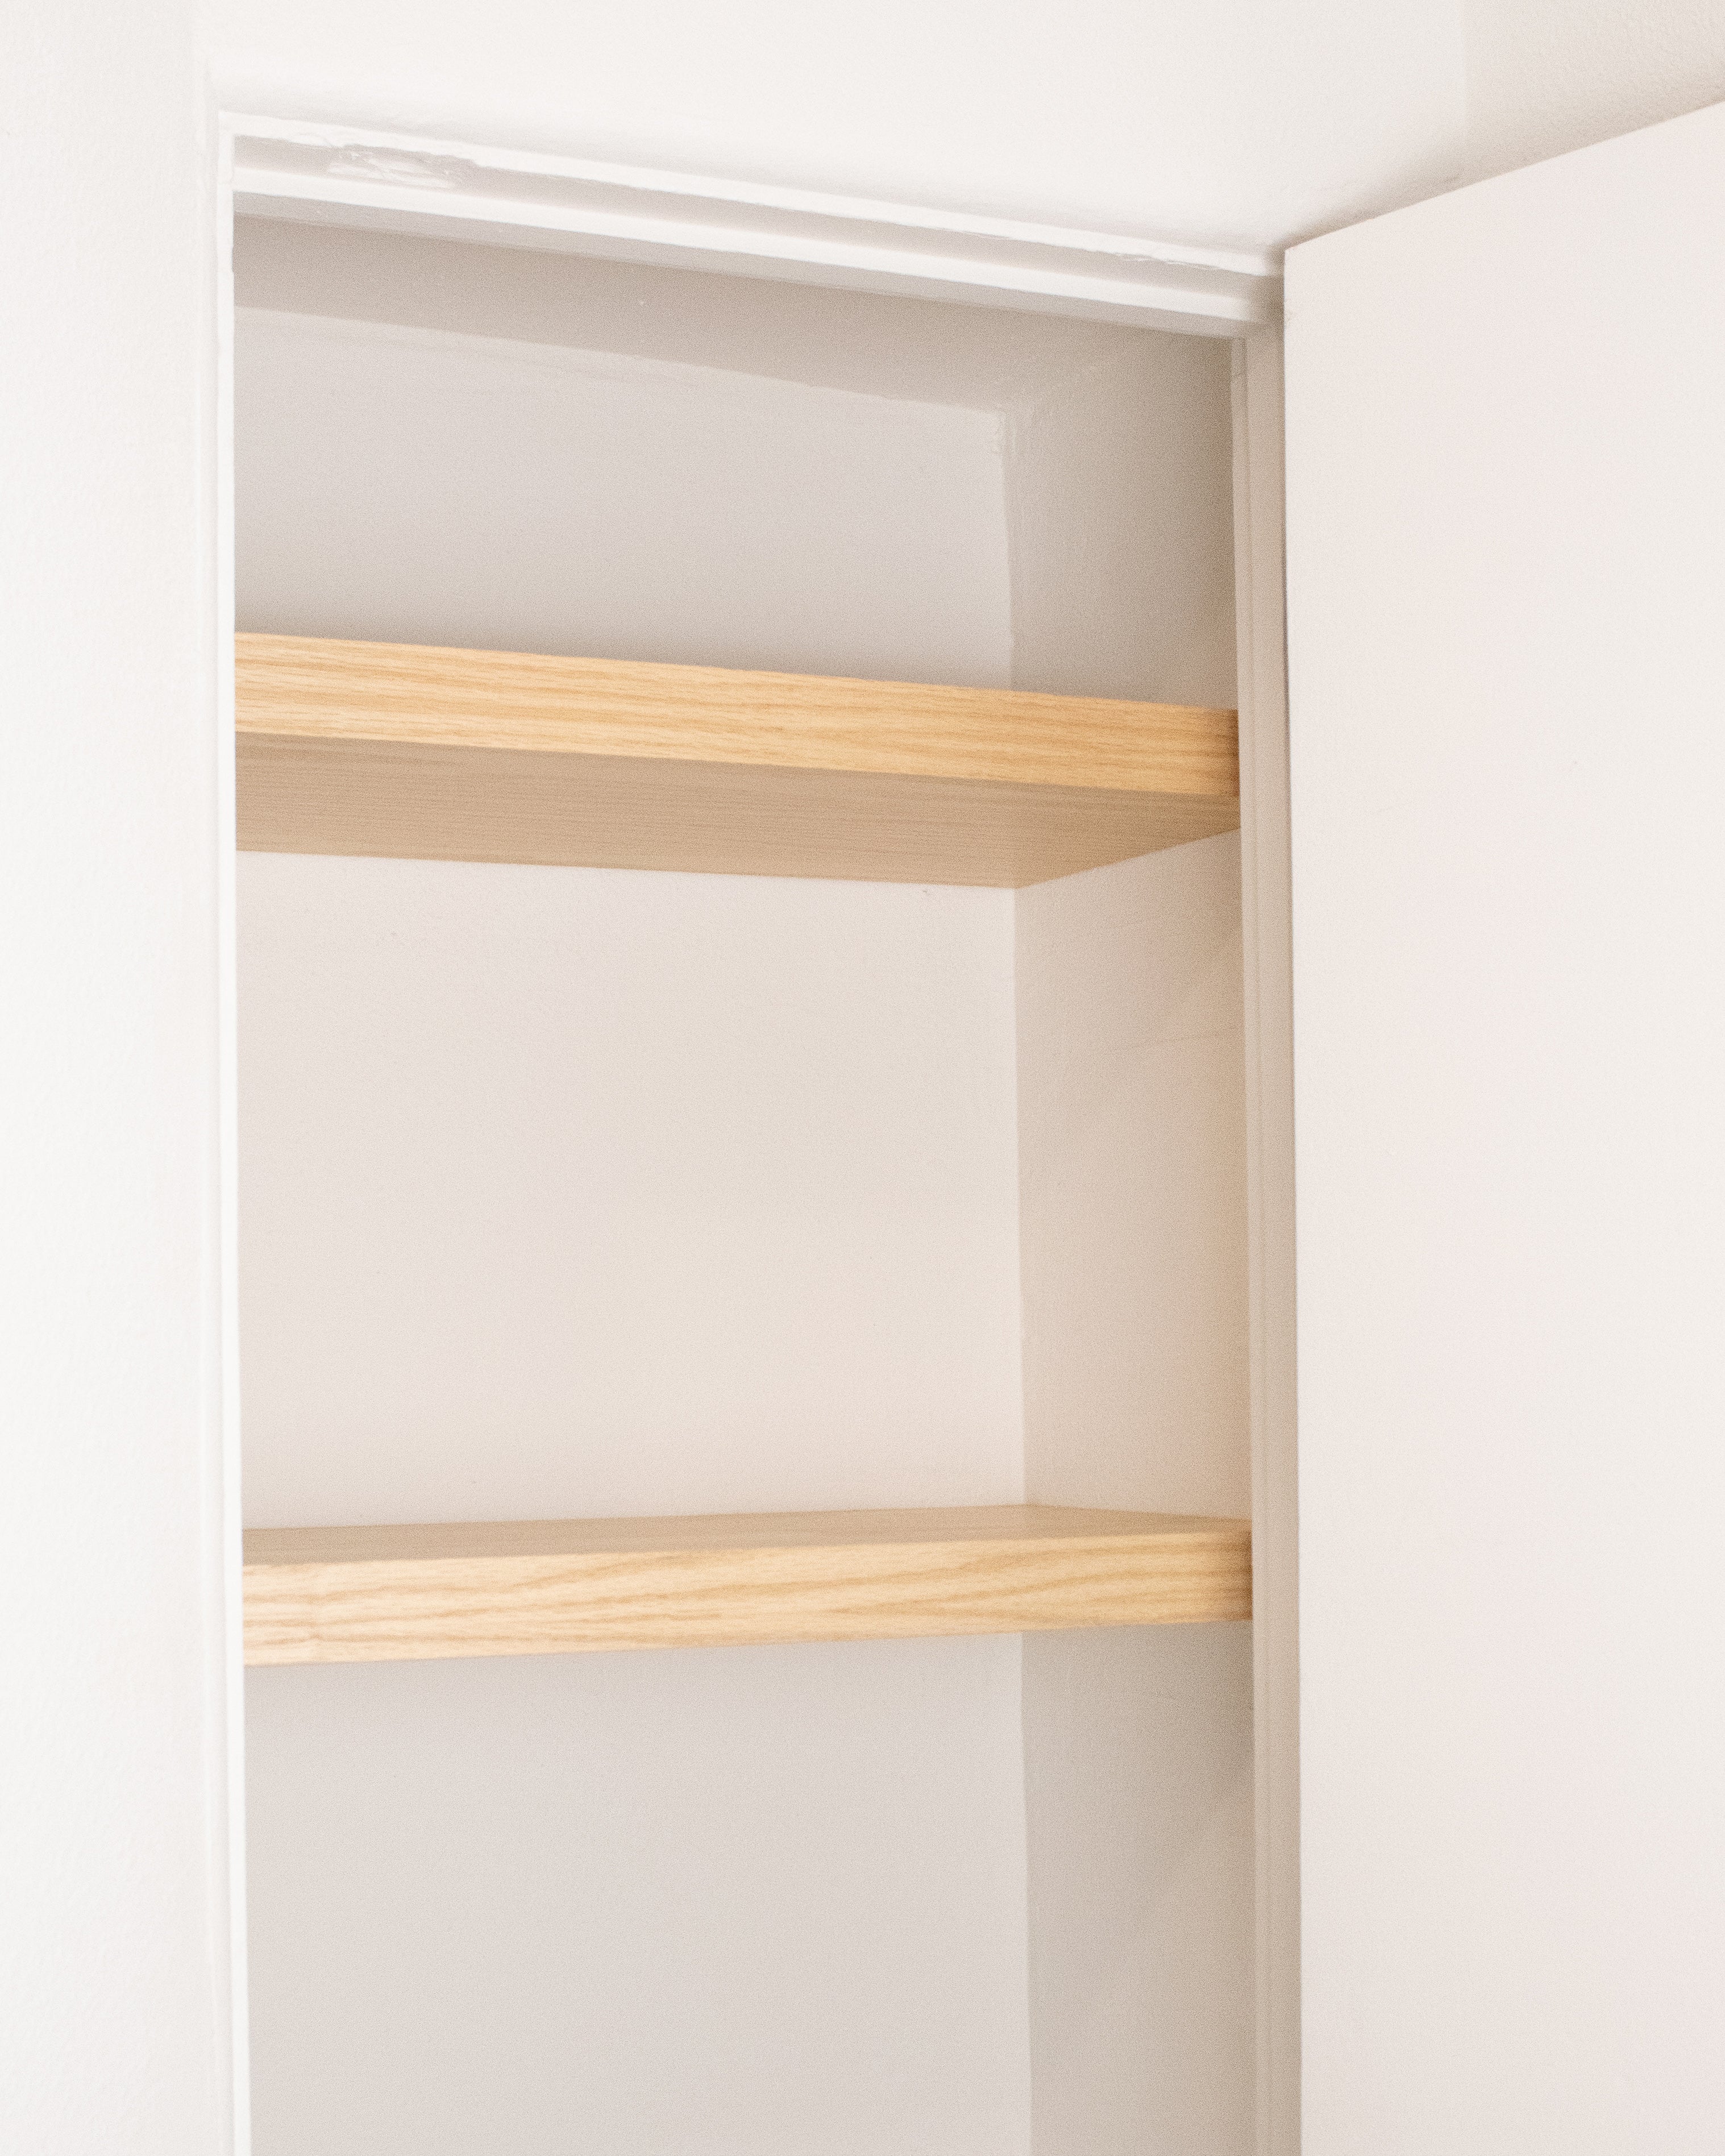 White 4.1-6" thick Cabinet Top / Slab Shelf